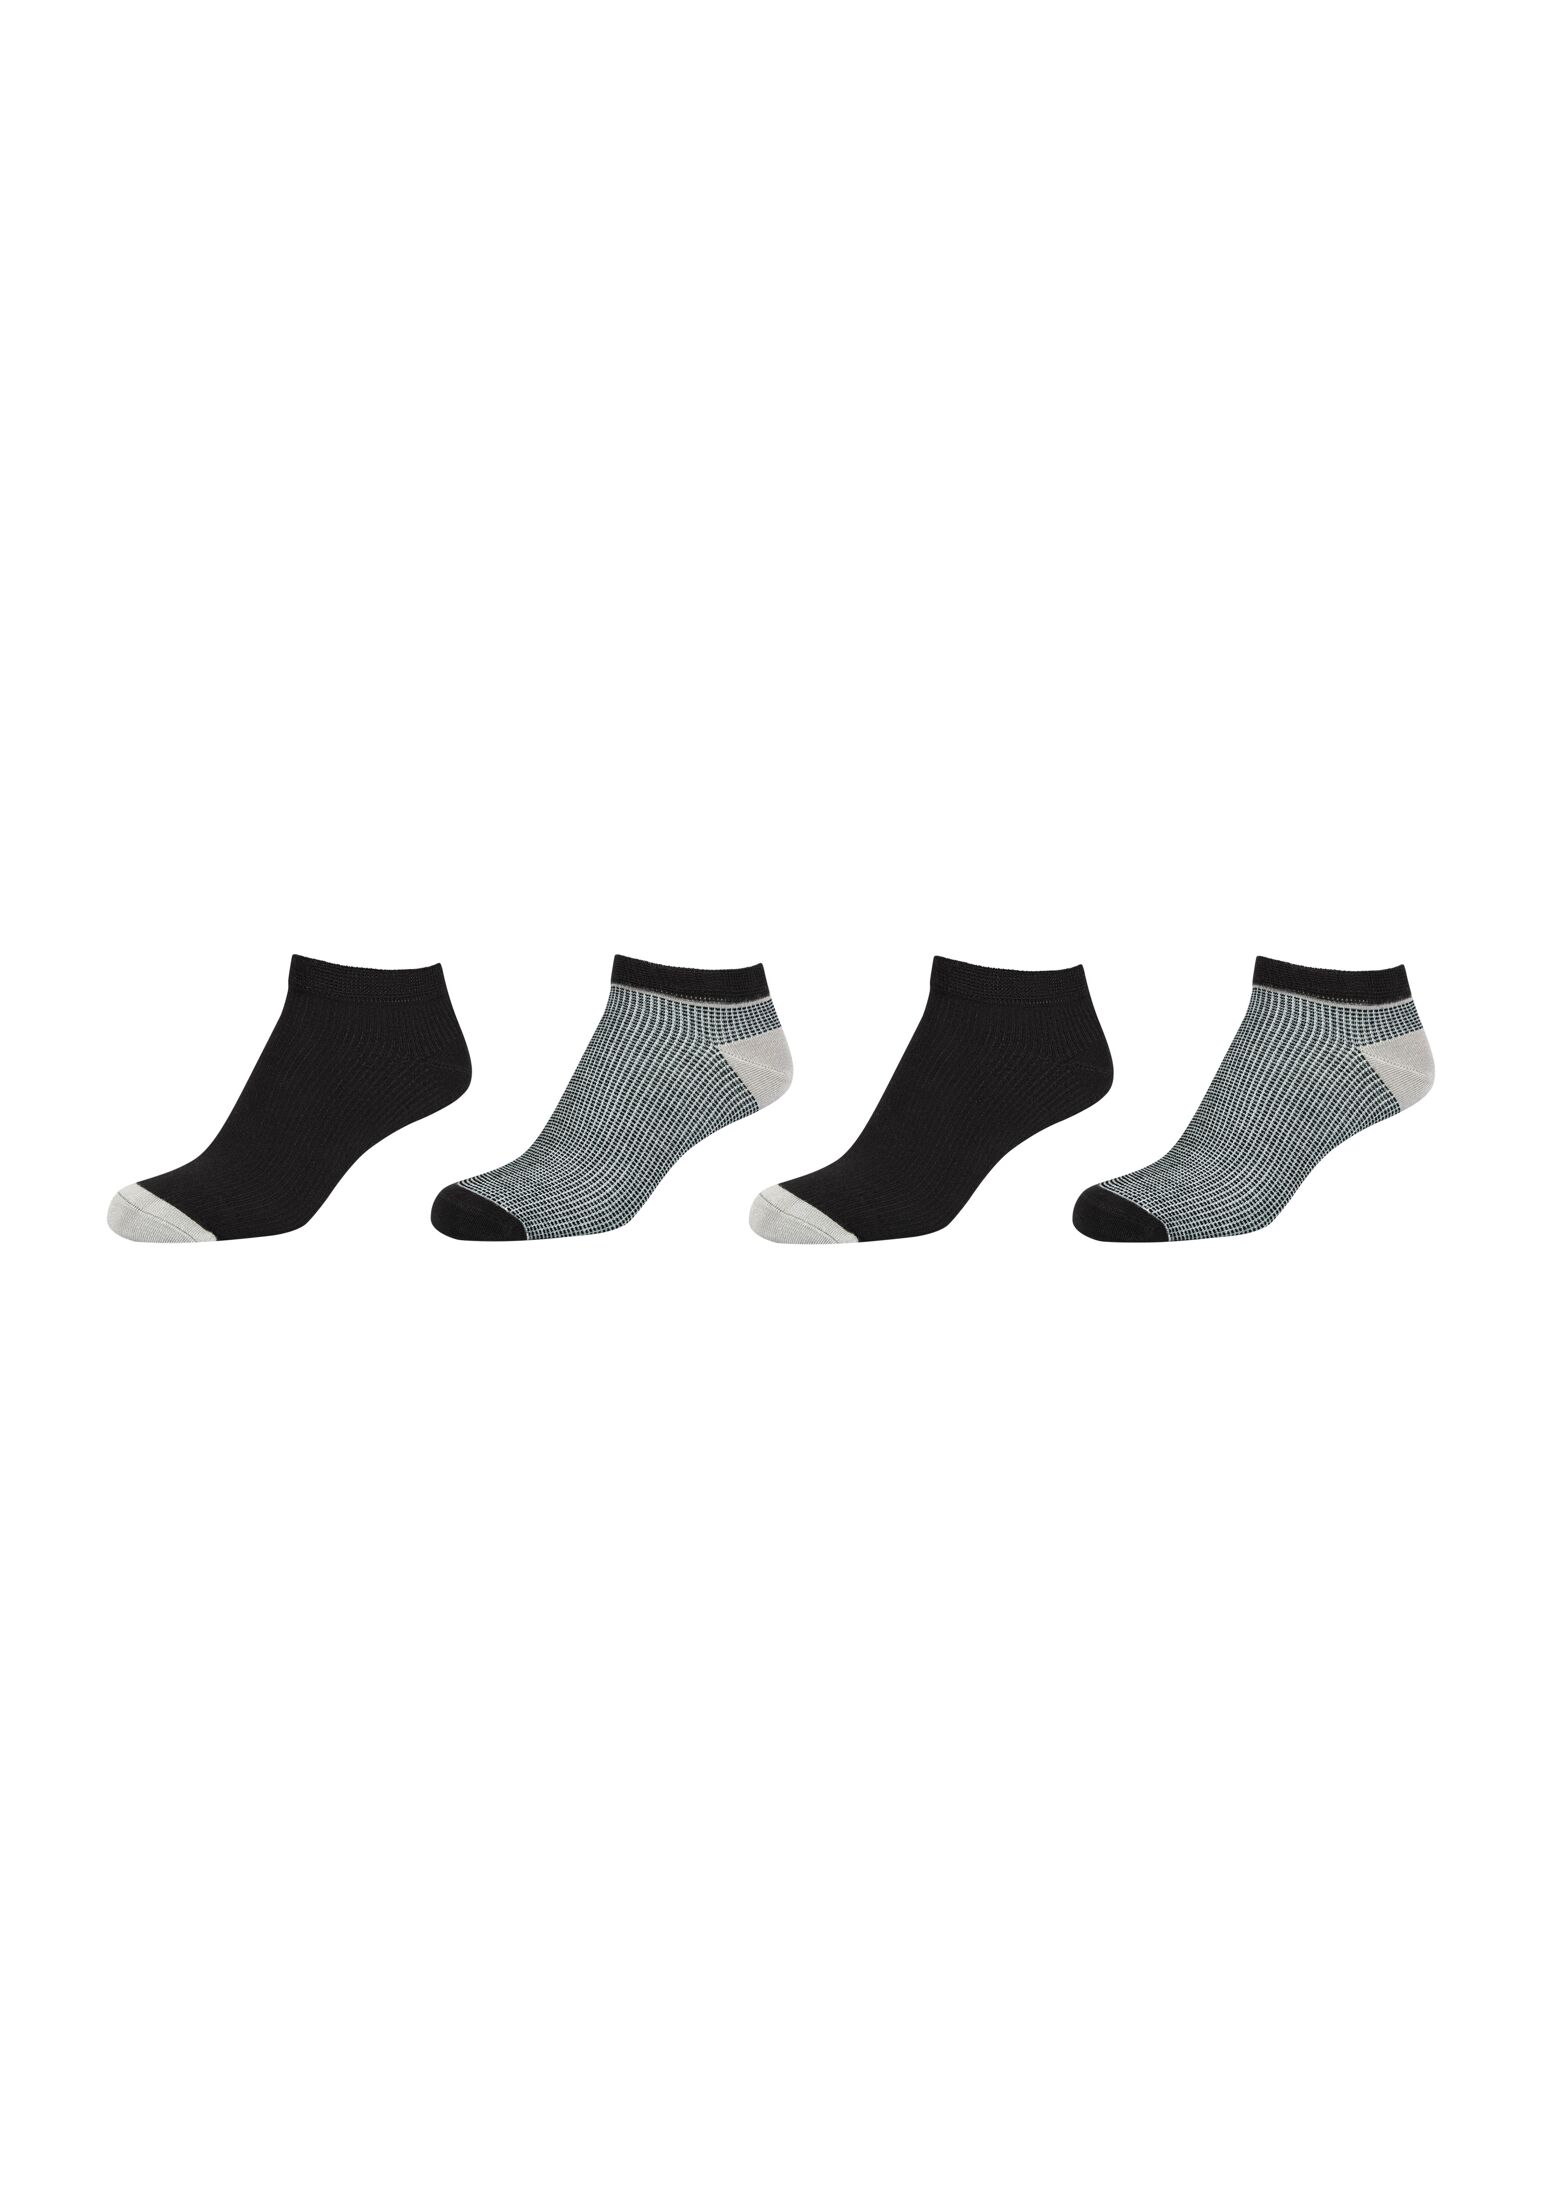 Носки camano Sneaker 4 шт silky touch, черный